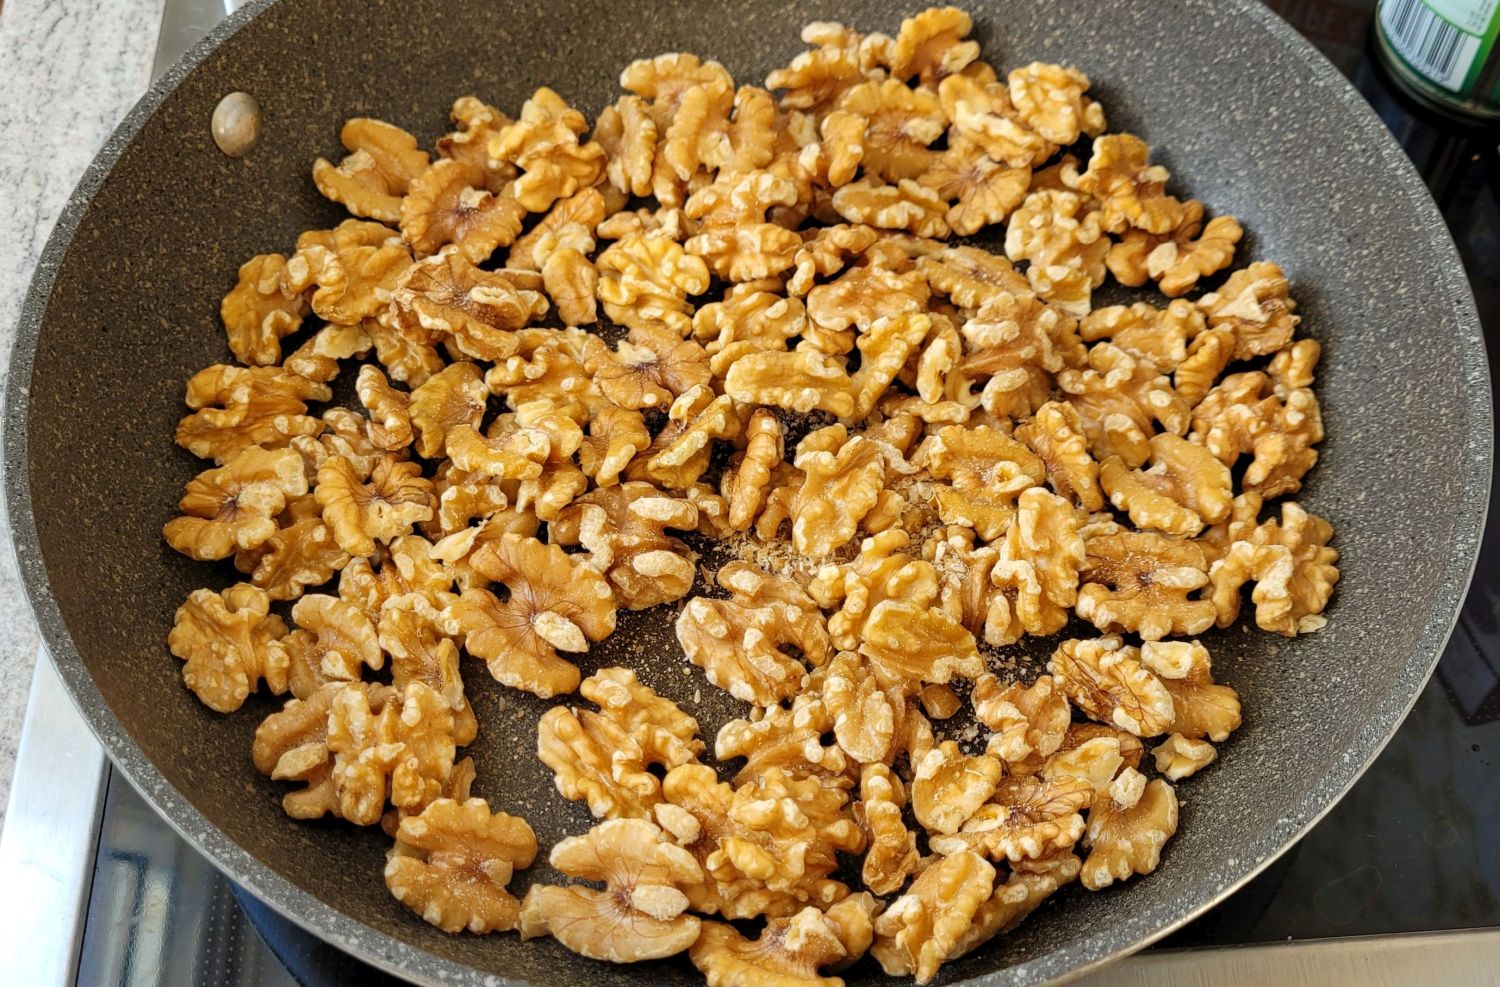 Nina's Recipes: Roasting Walnuts in a pan